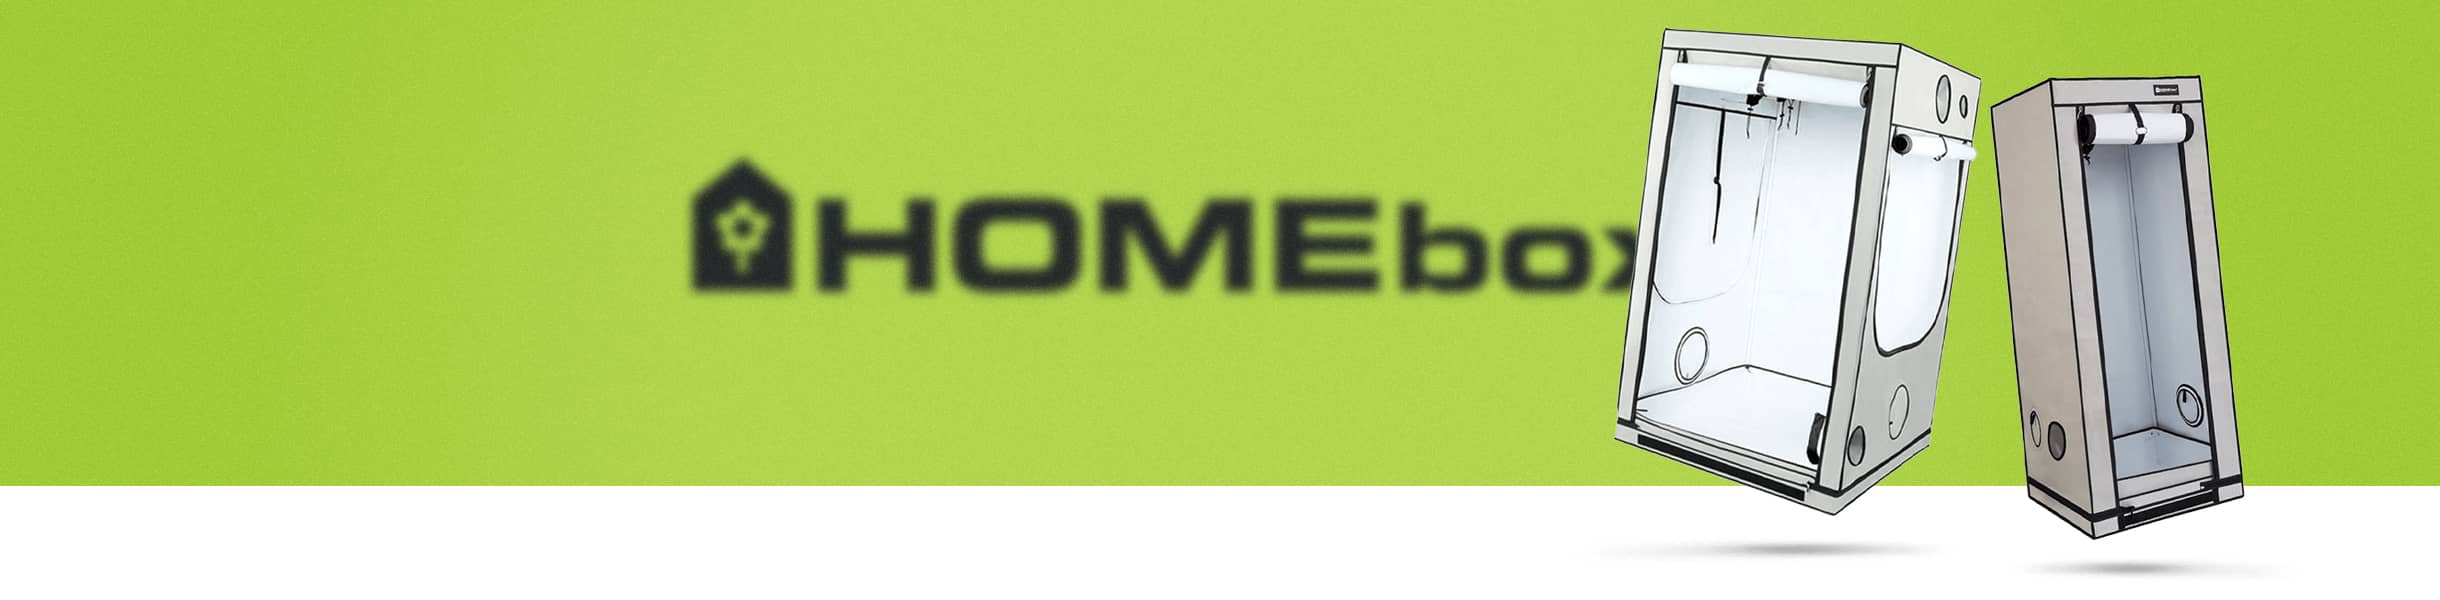 Homebox - Online Shop